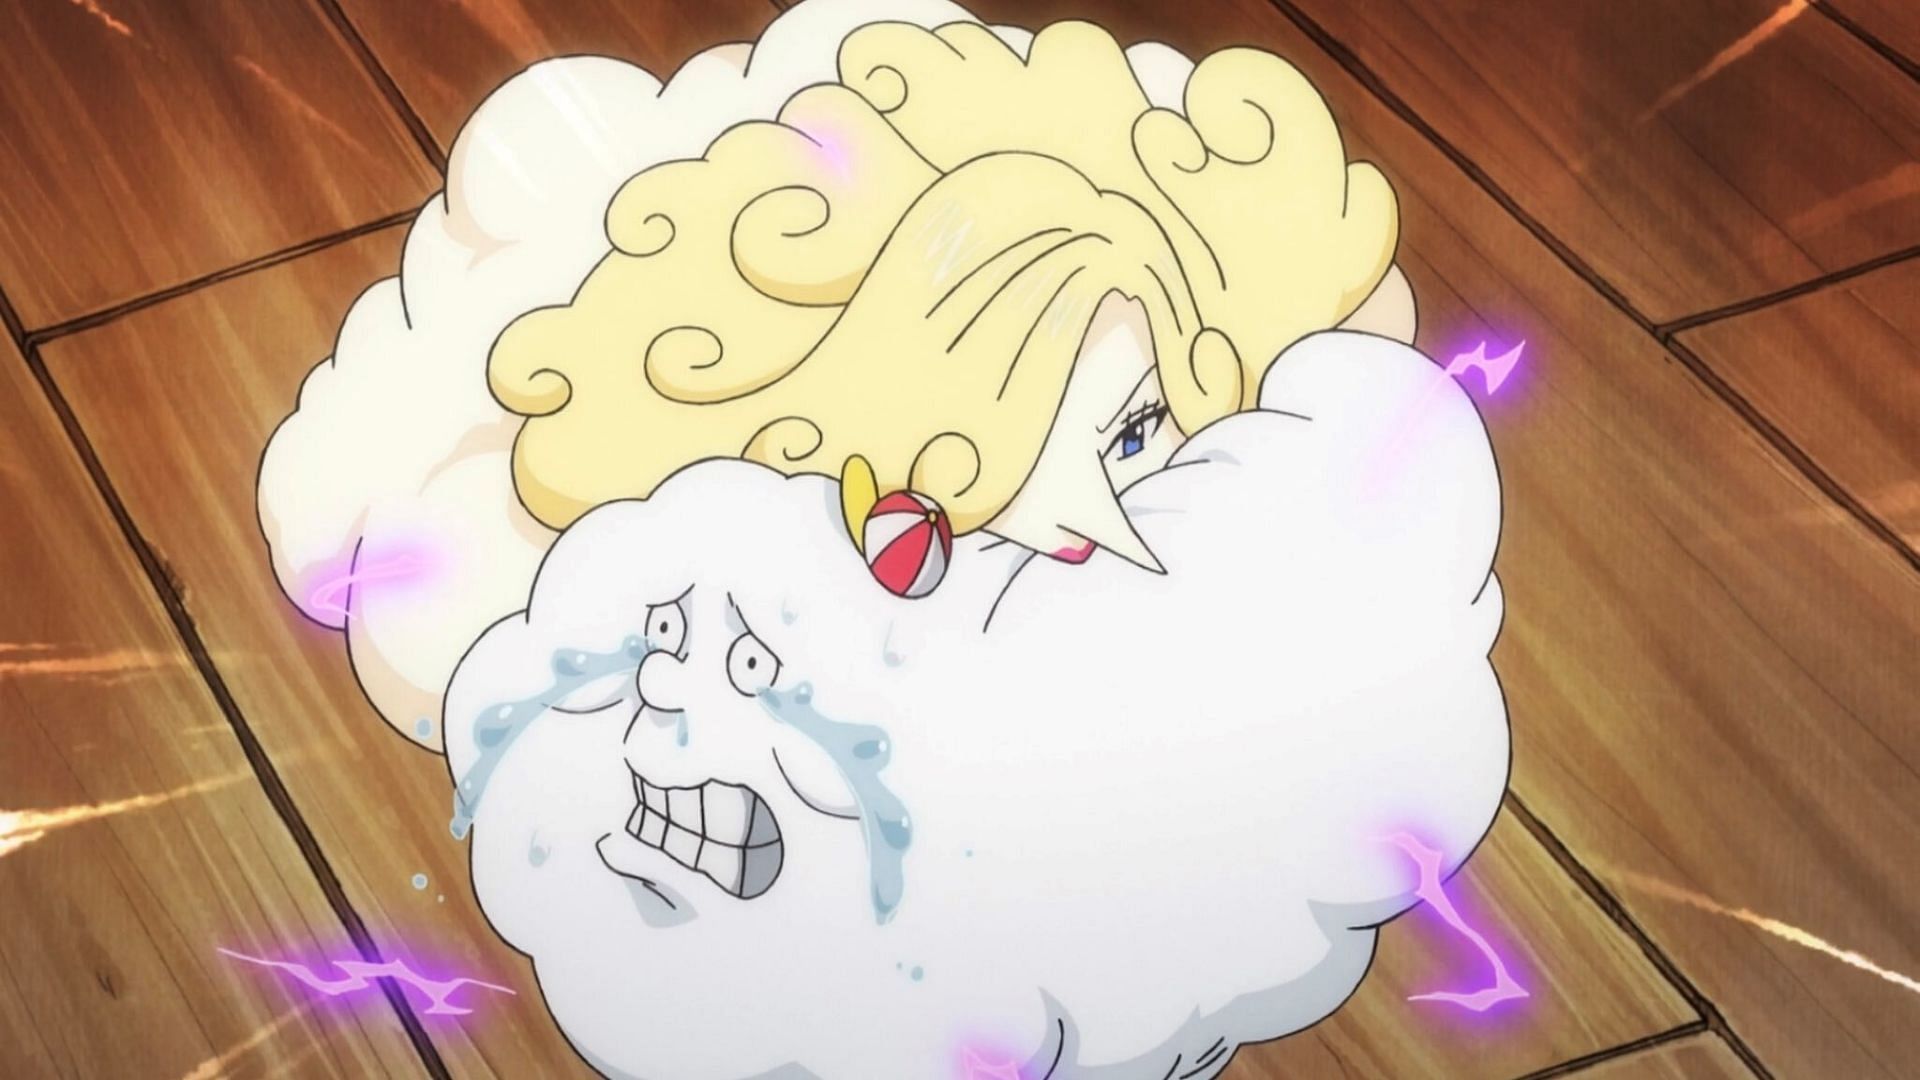 Hera eating Zeus in One Piece episode 1034 (Image via Toei Animation)